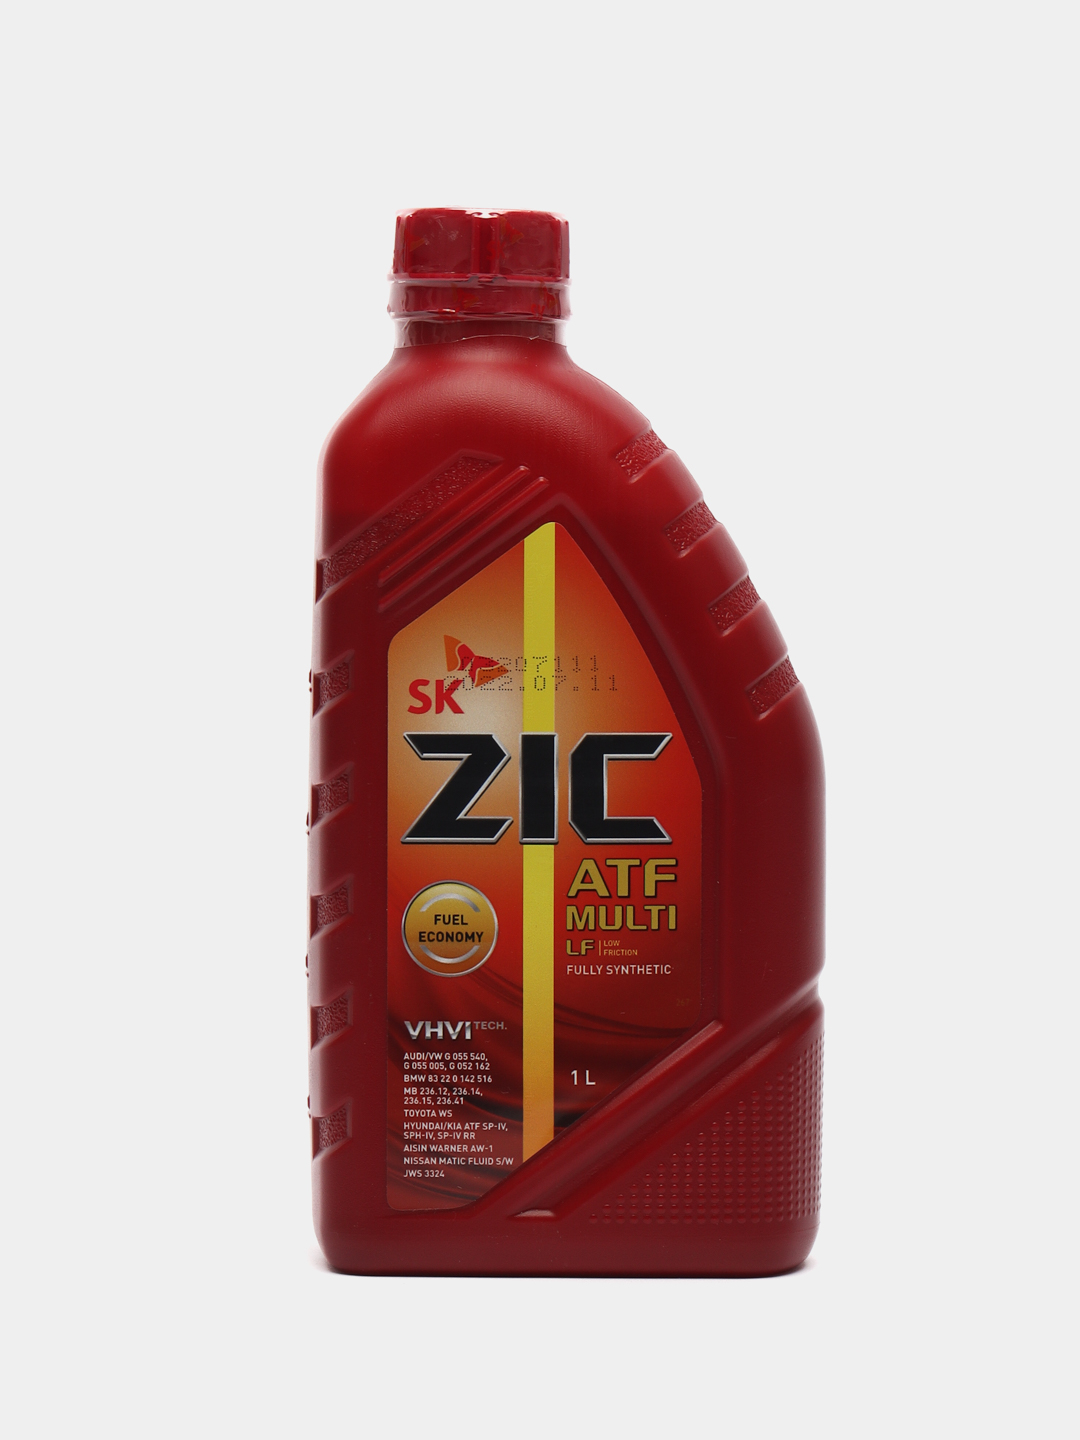 Zic atf multi купить. ZIC ATF Multi LF. ZIC ATF Multi LF цвет. Масло ZIC ATF Multi класс вязкости. ZIC ATF Multi какого цвета.